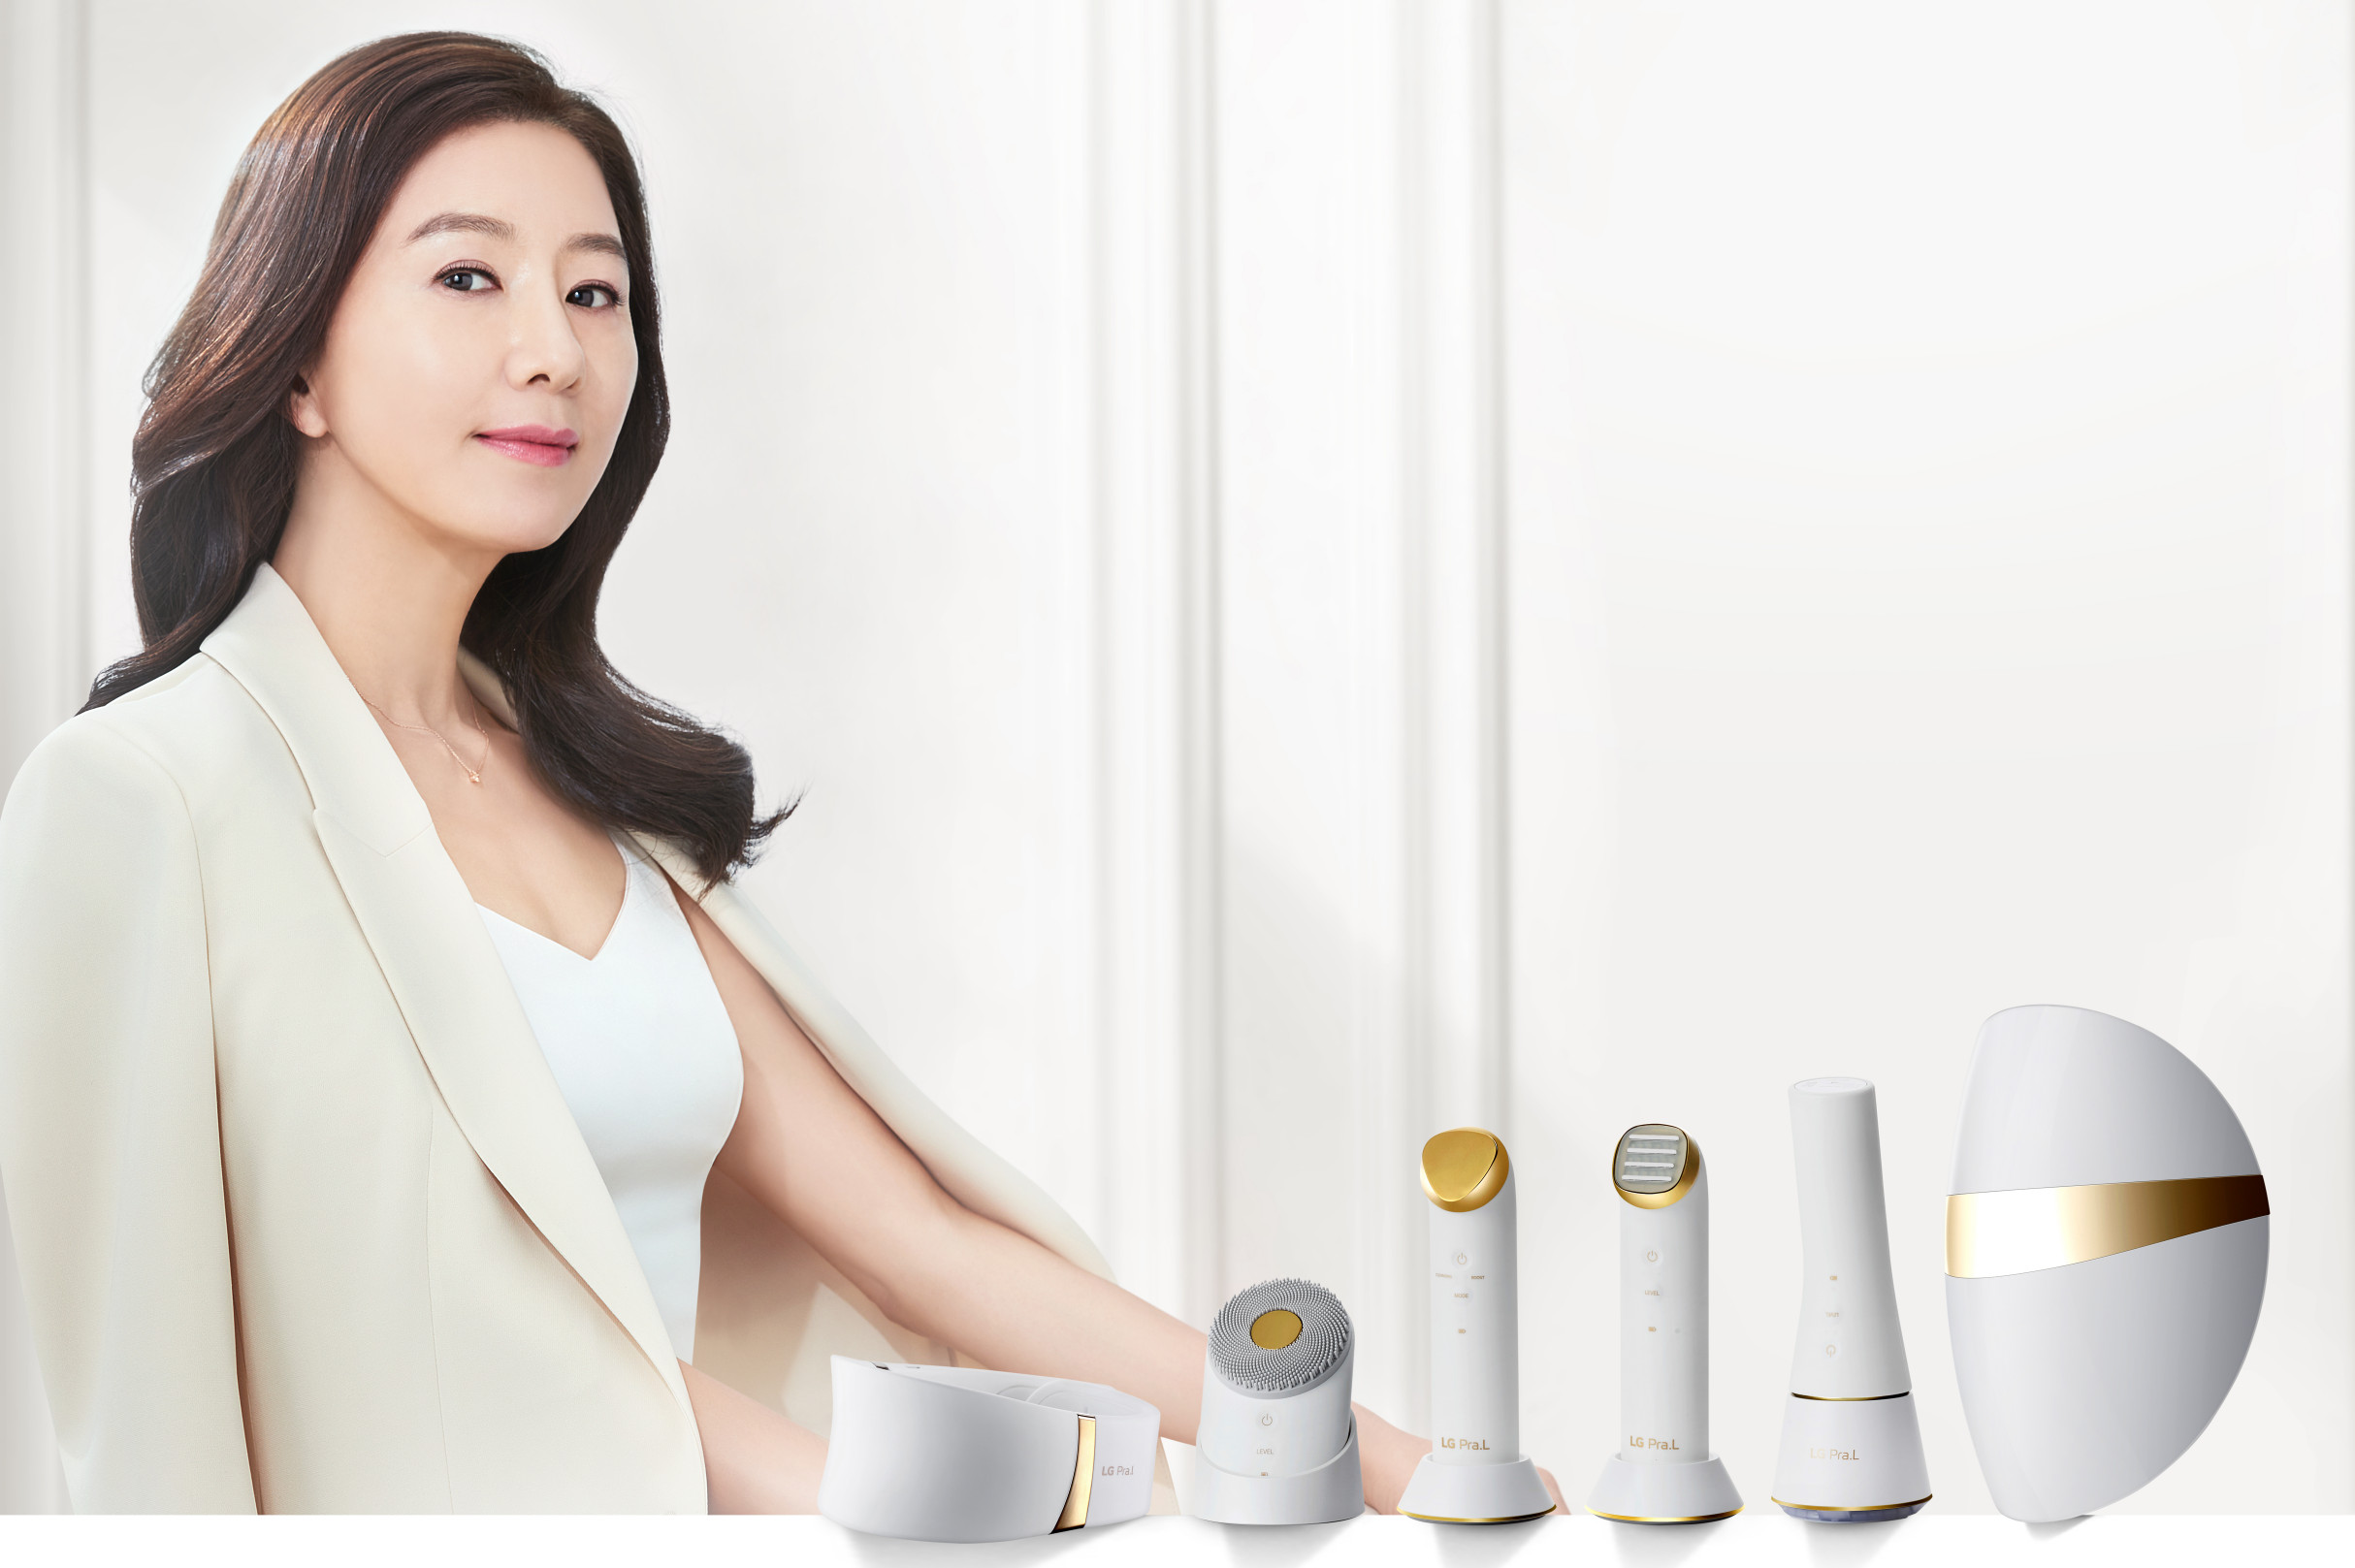 LG 프라엘 광고 모델 김희애가 LG 프라엘 6종 제품과 함께 포즈를 취하고 있다.